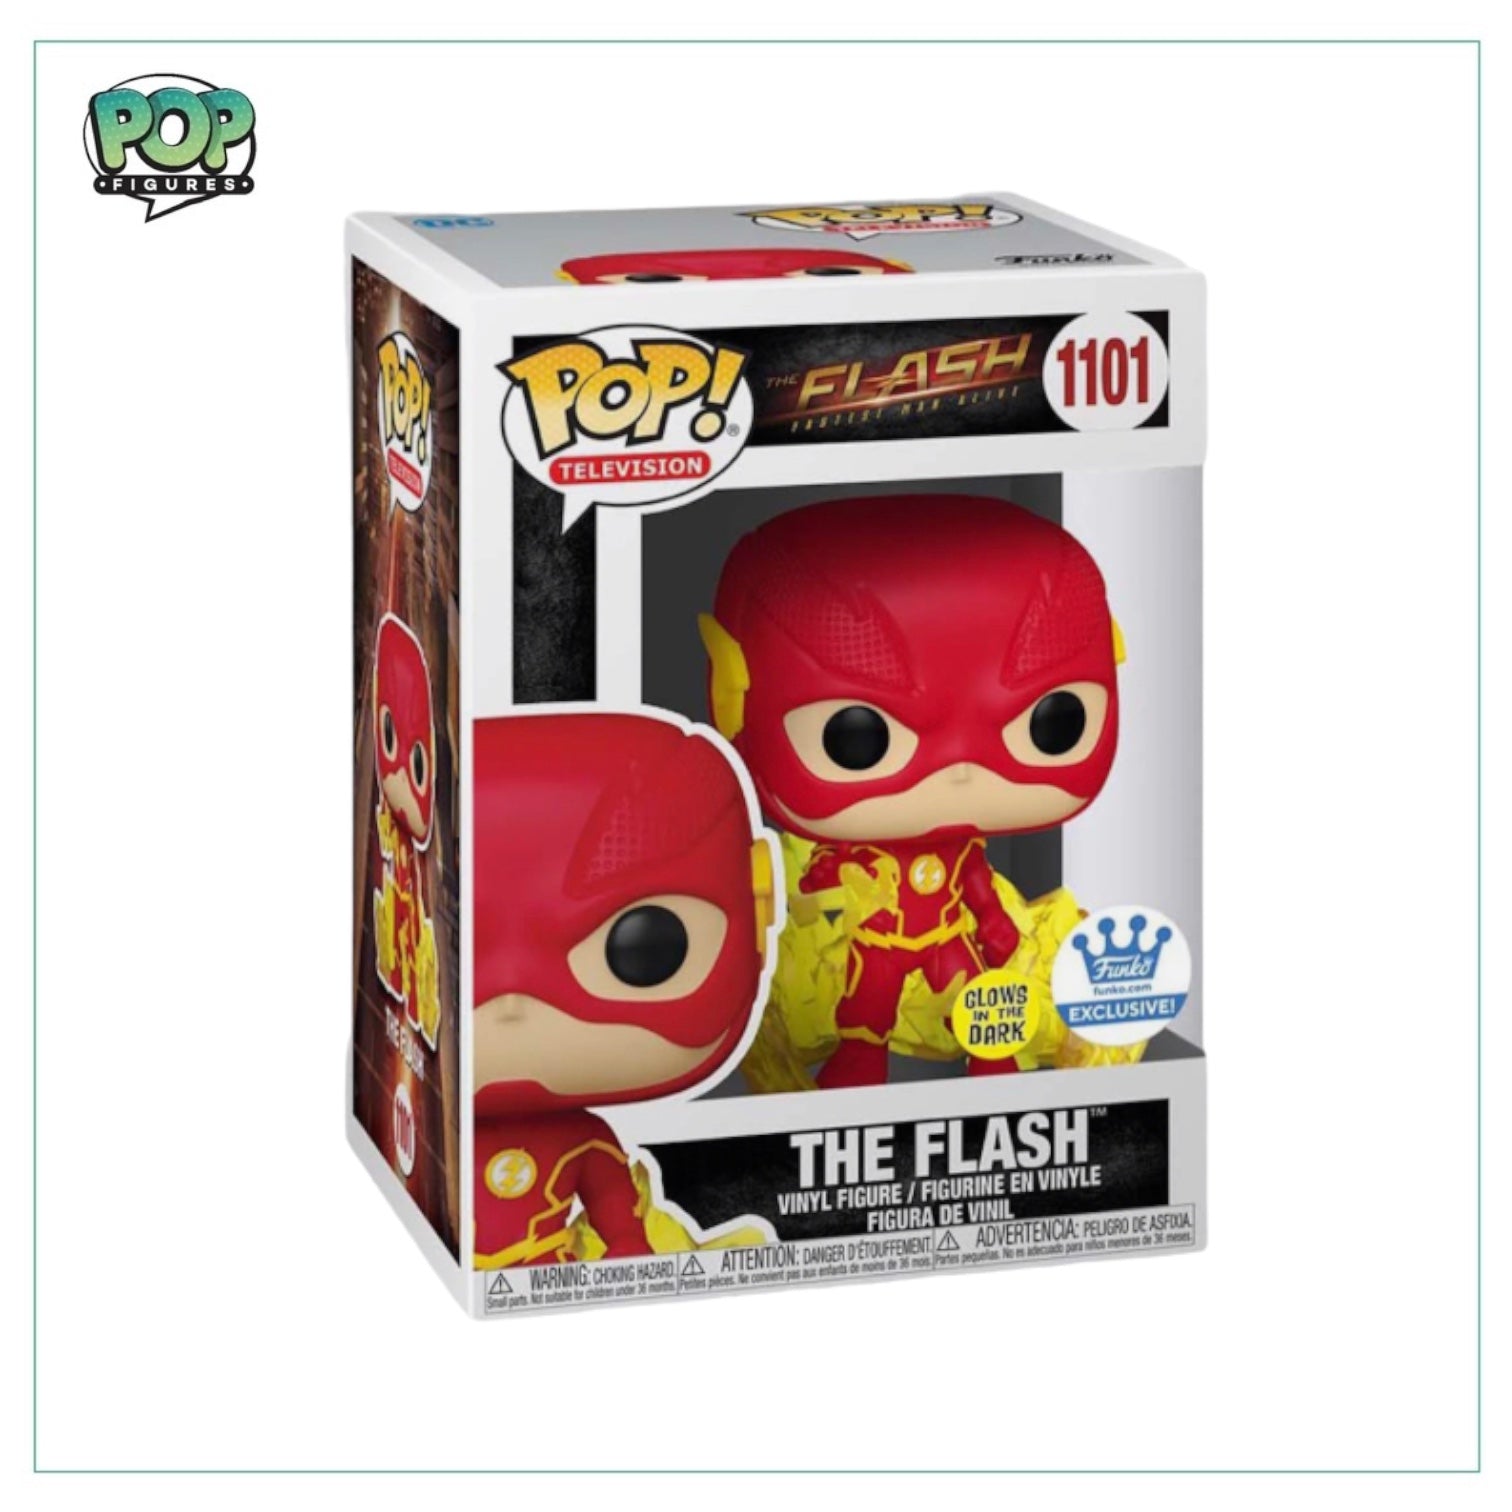 The Flash (Glow In The Dark) #1101 Funko Pop! - The Flash - Funko Exclusive